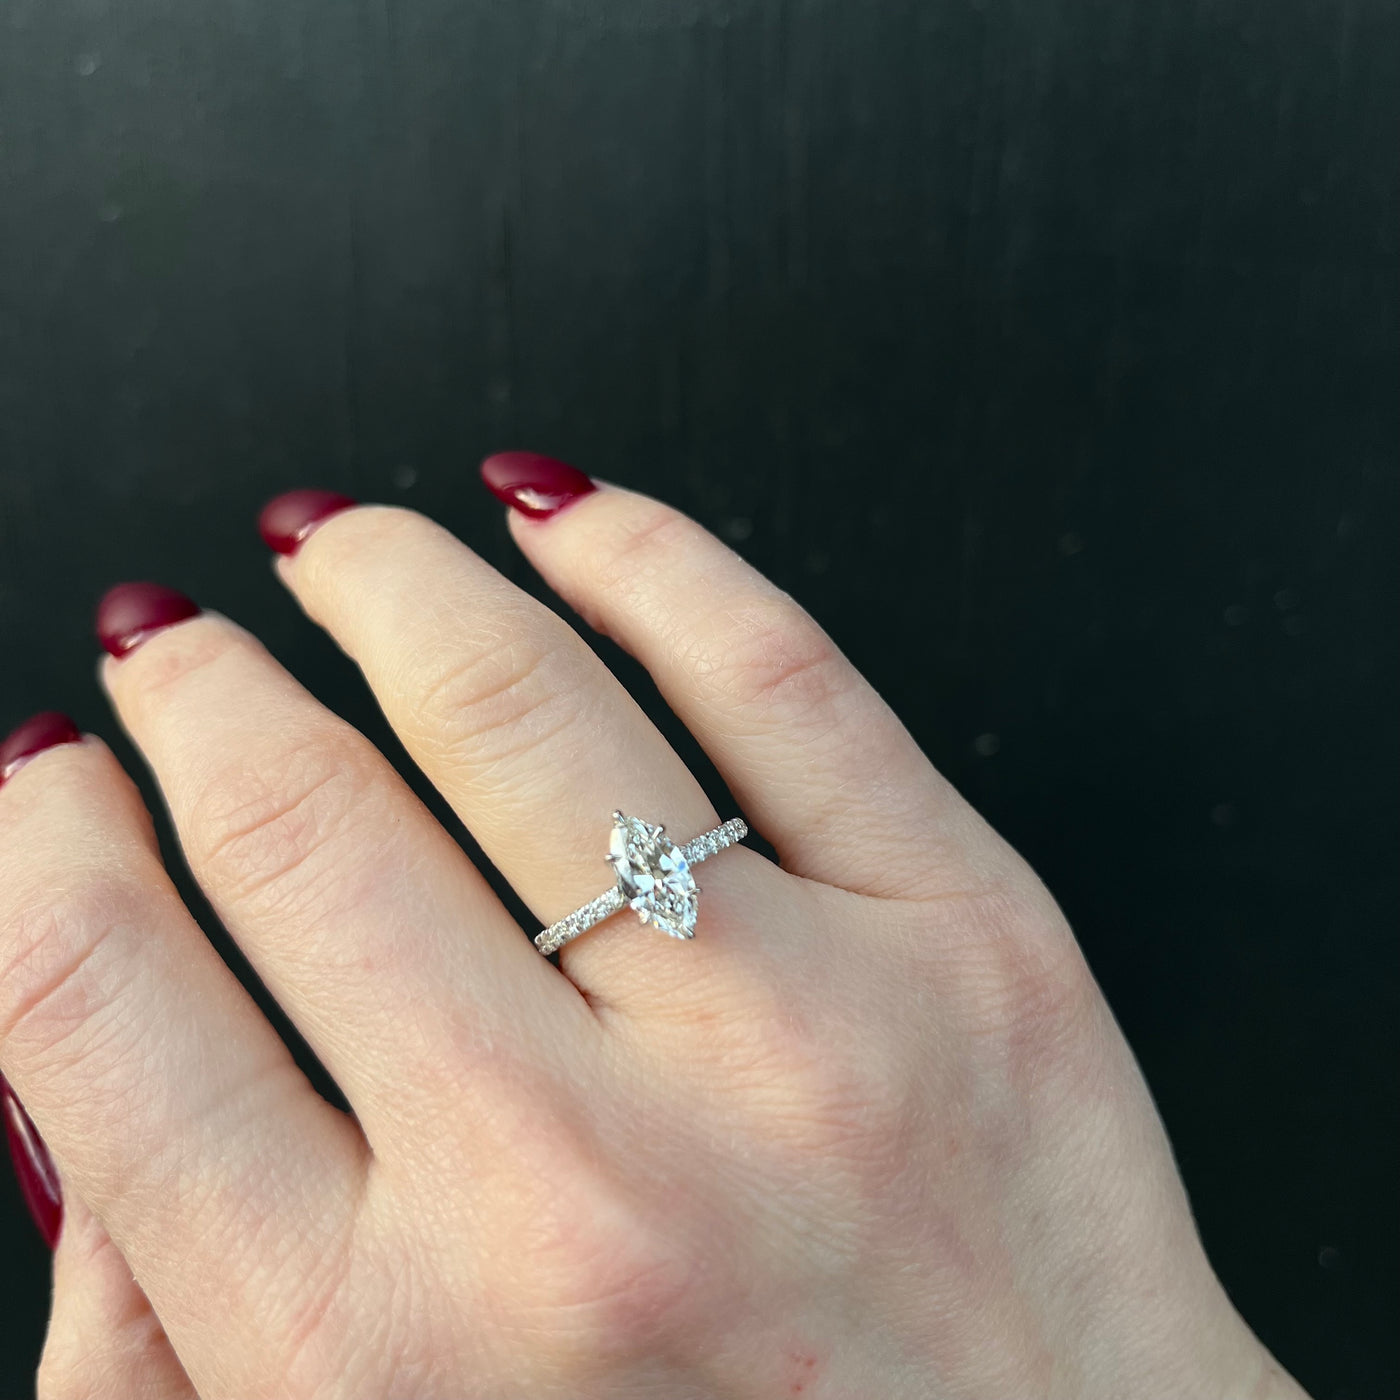 14K White Gold GIA 1.04 Carat Marquise Cut Diamond Engagement Ring